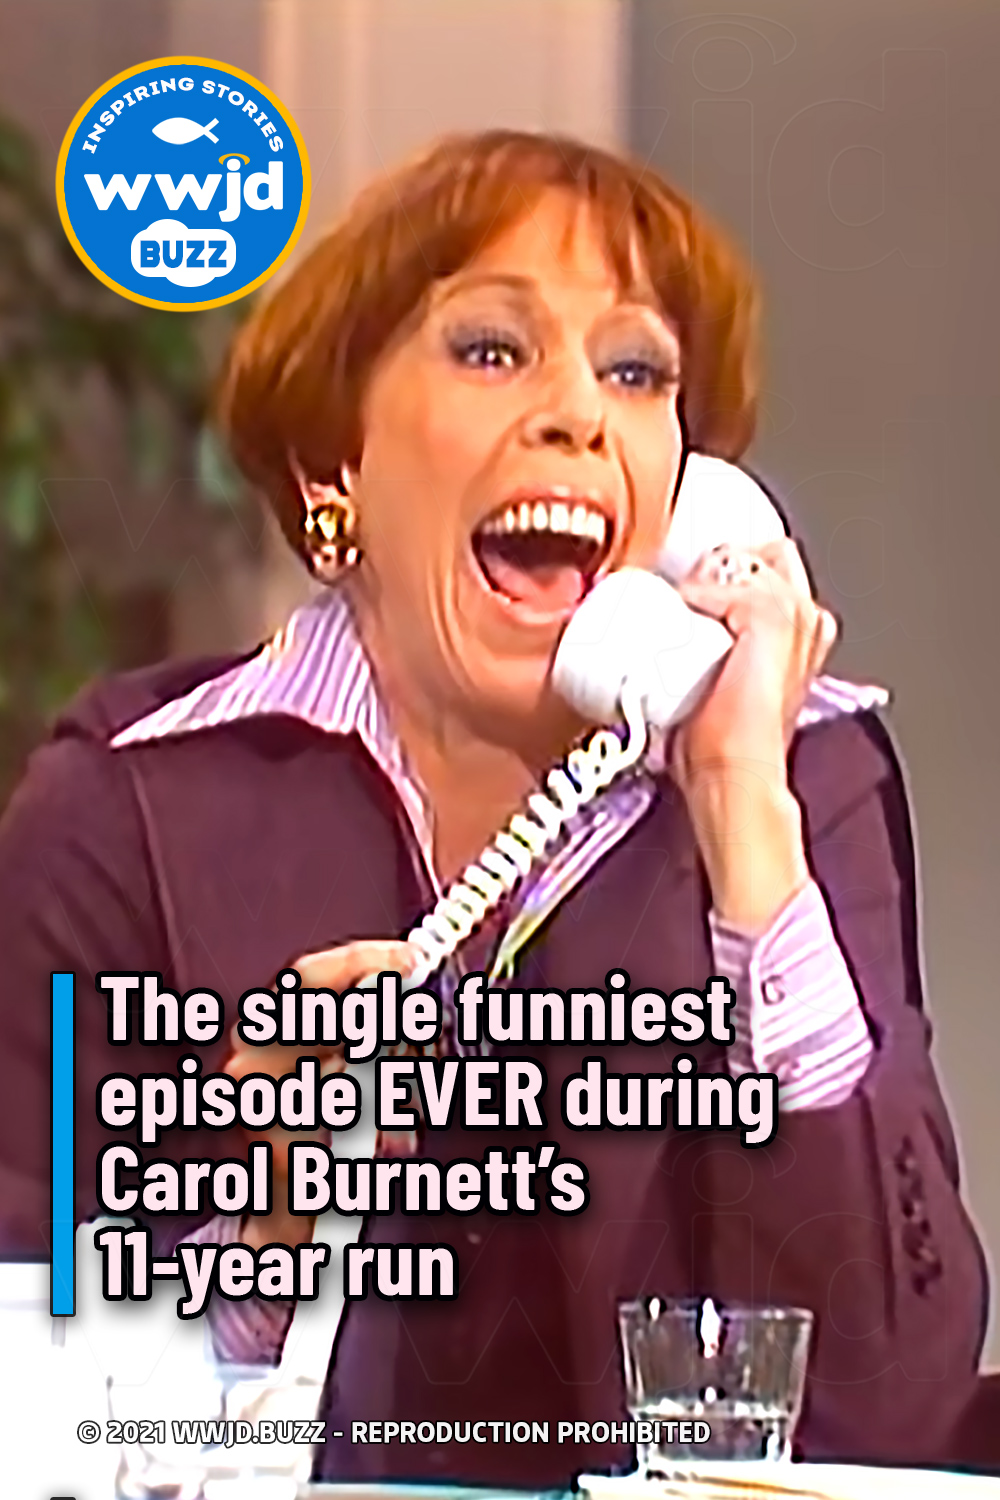 The single funniest episode EVER during Carol Burnett’s 11-year run